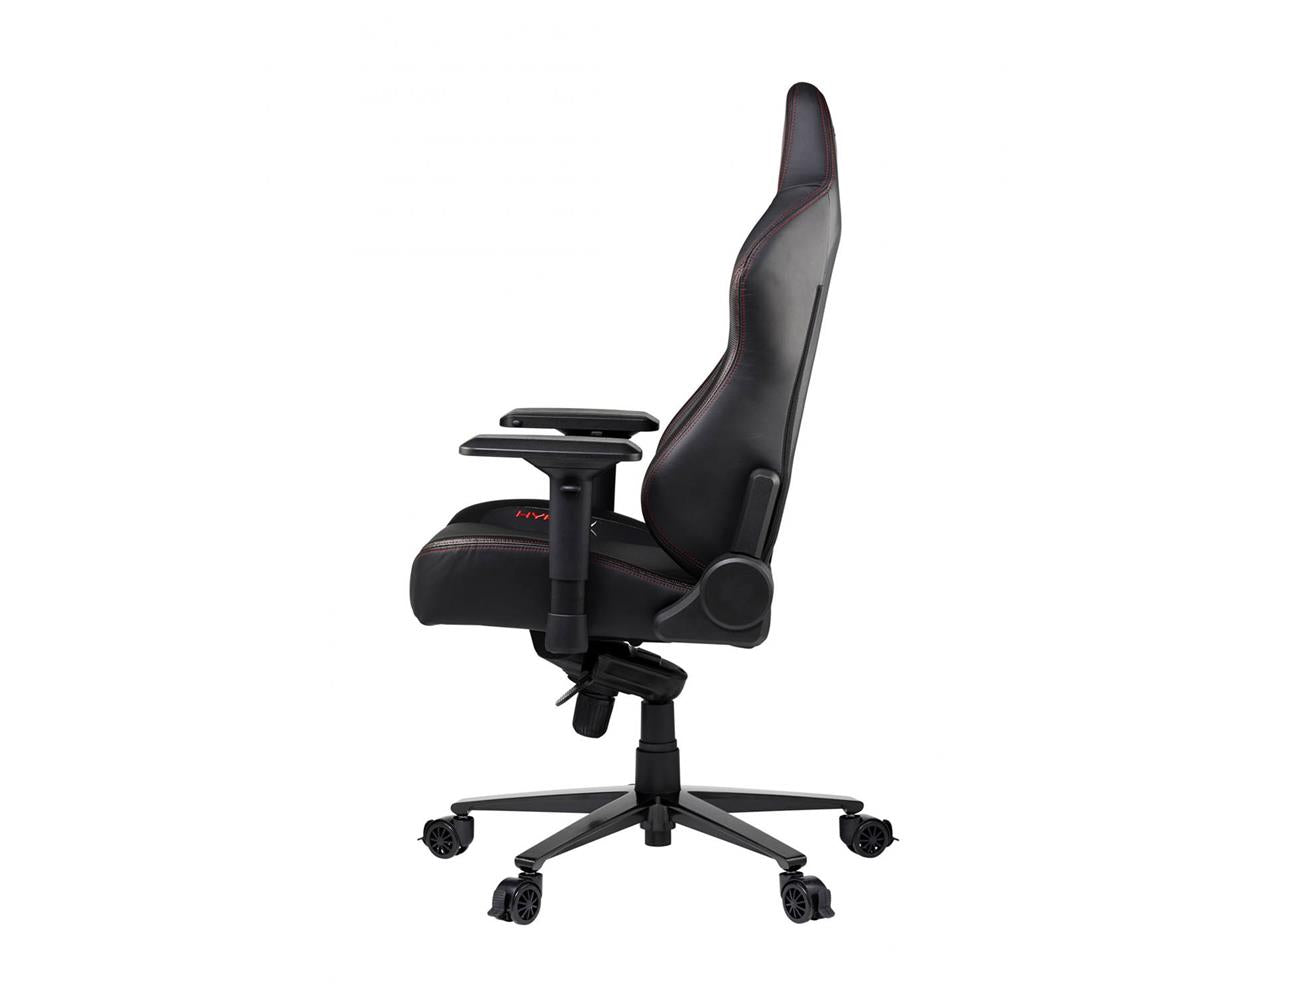 HyperX Stealth Gaming Chair